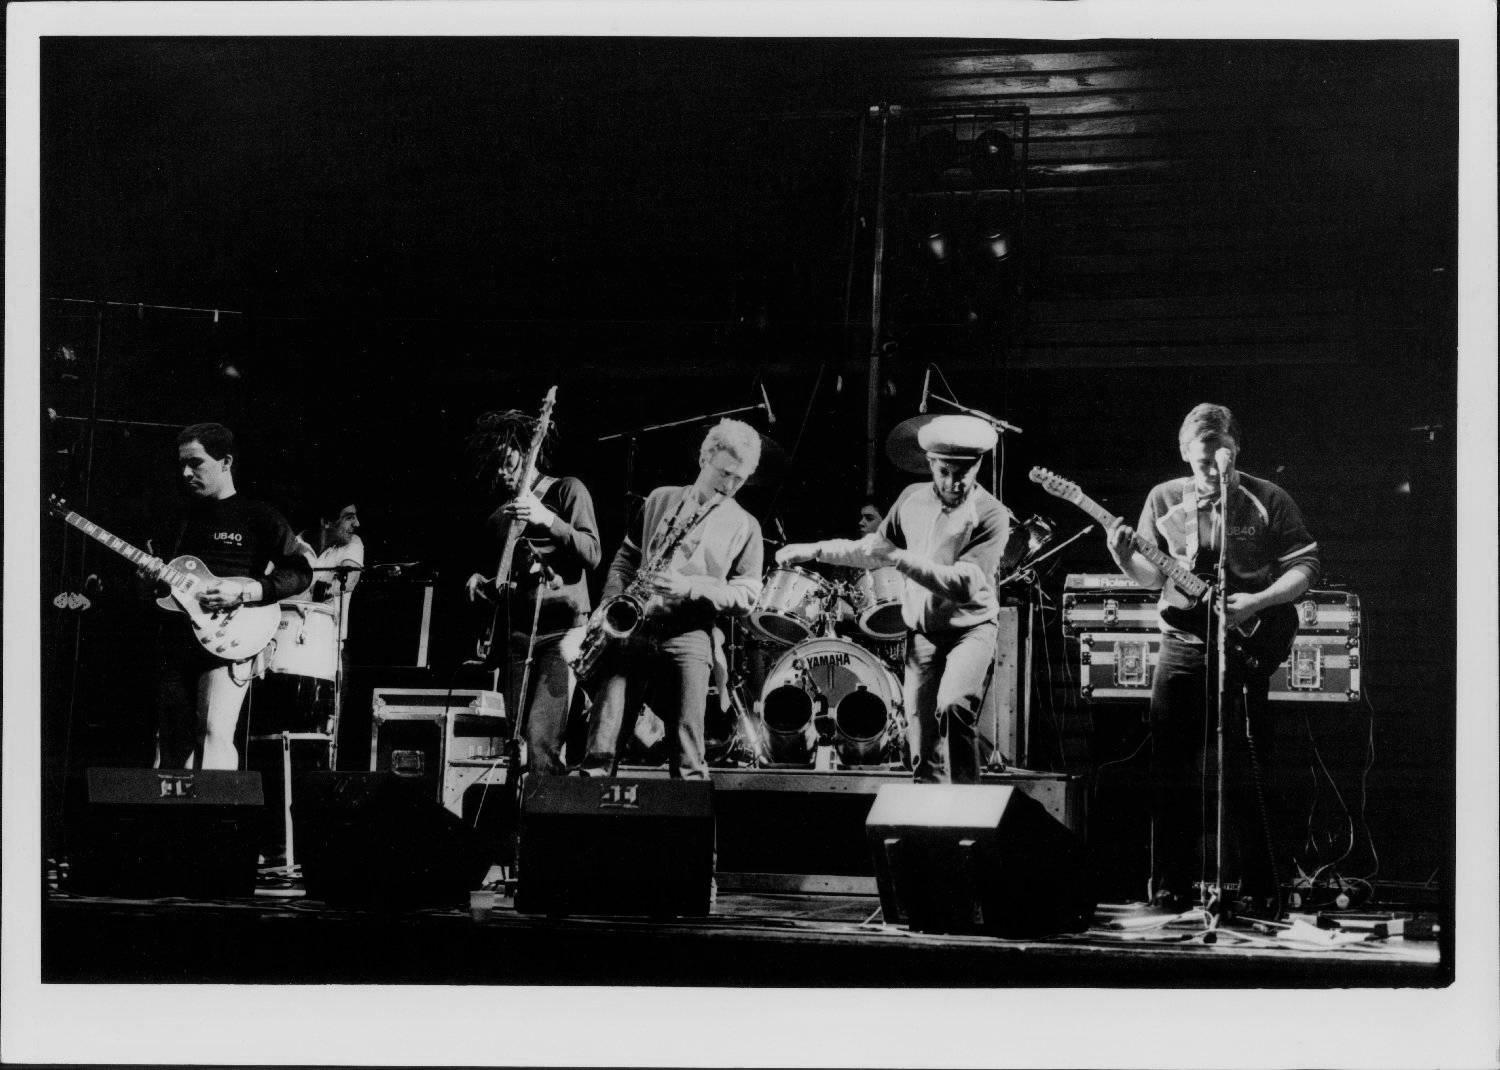 Paul Cox Black and White Photograph - UB40 in Concert Vintage Original Photograph